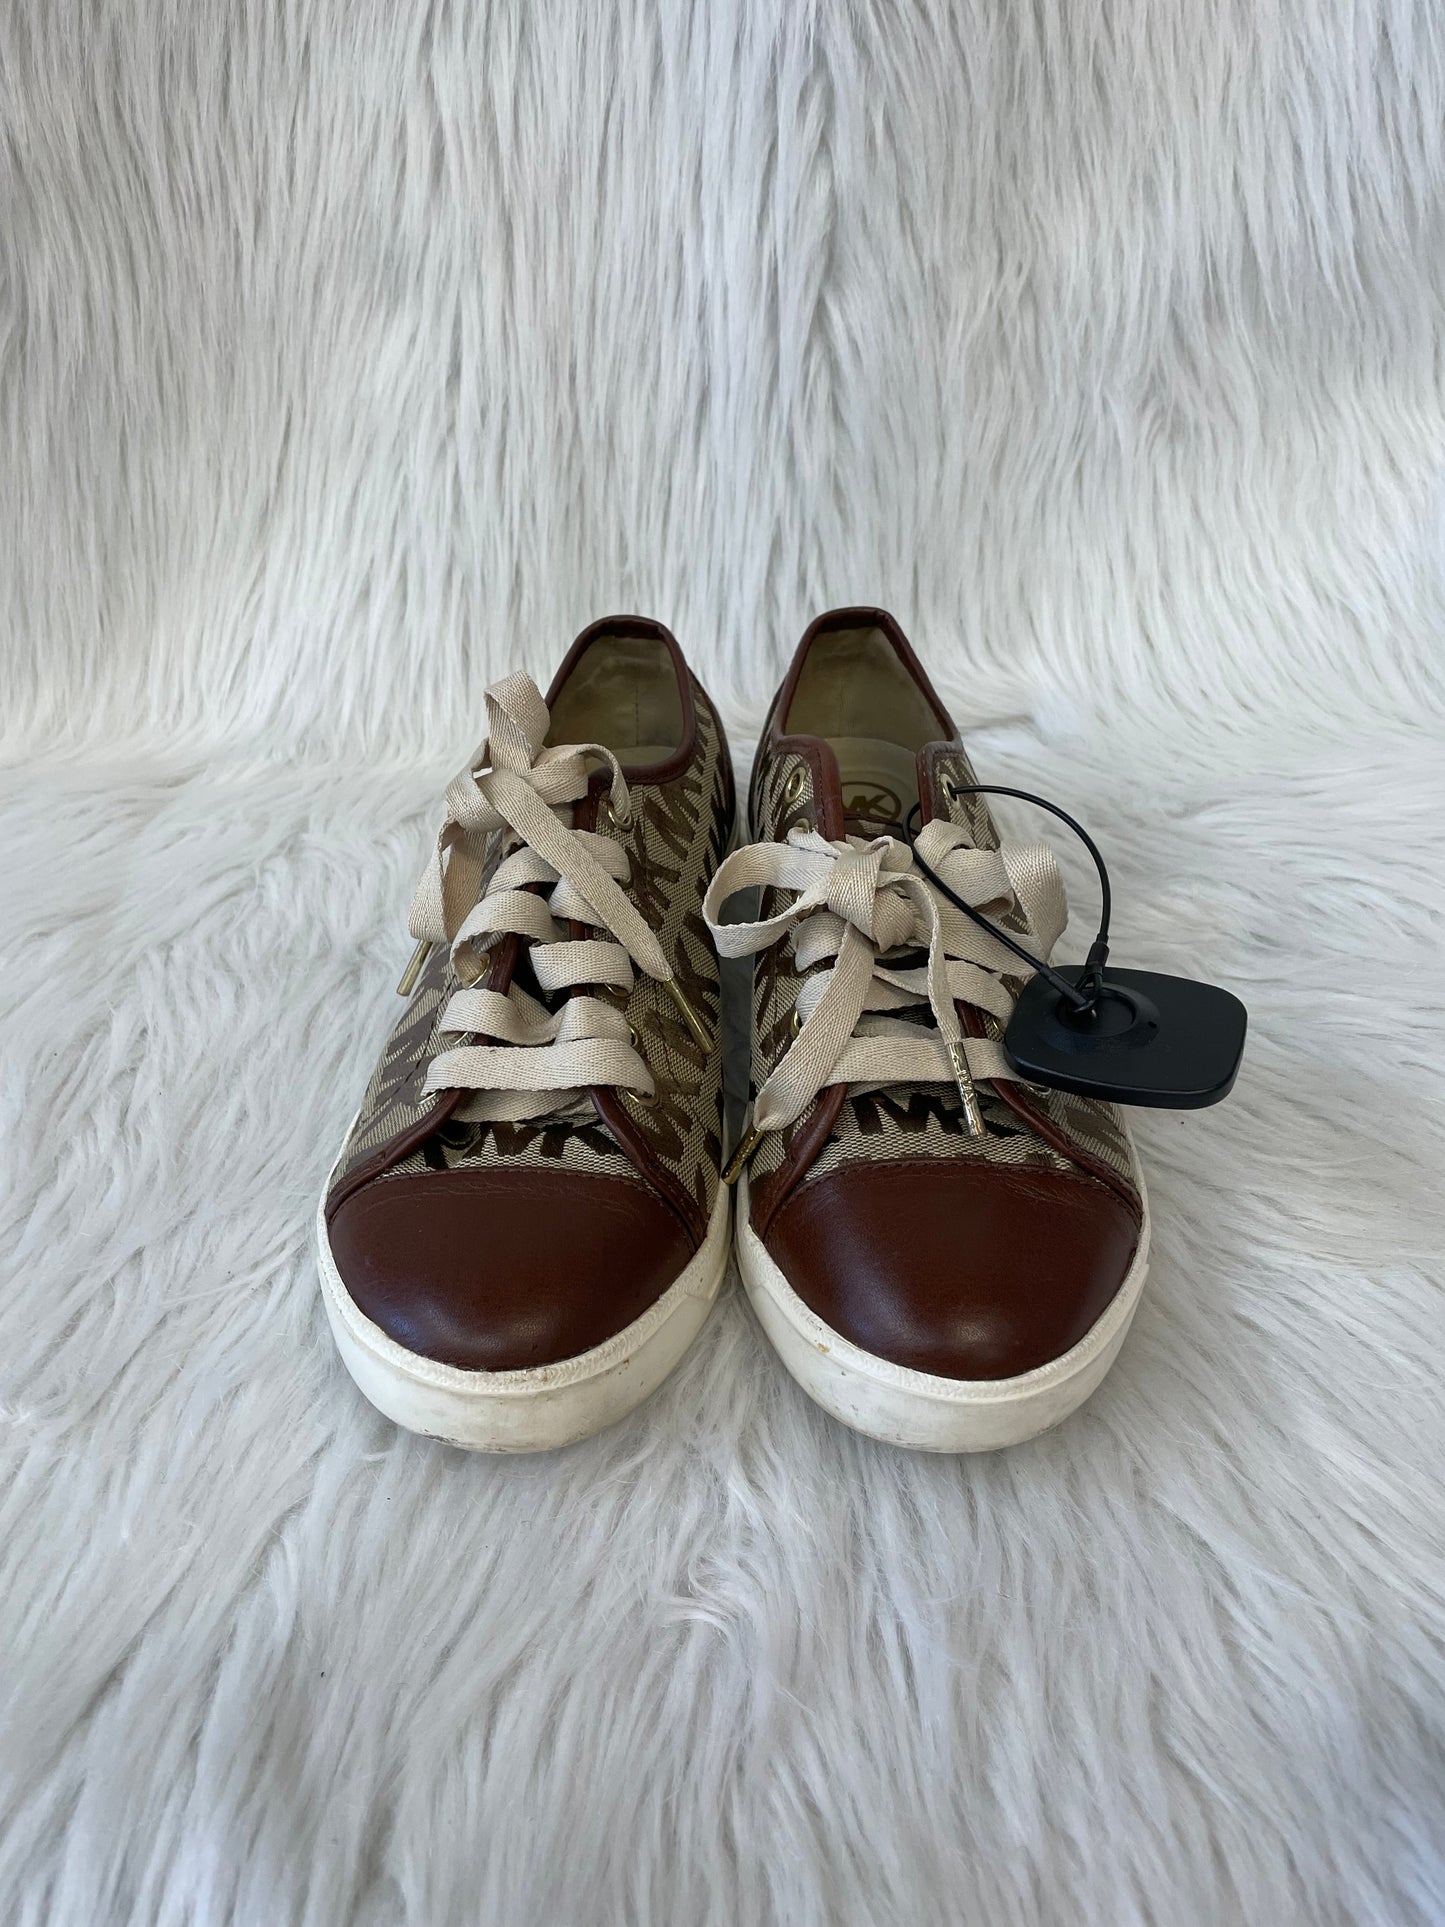 Brown & Tan Shoes Designer Michael By Michael Kors, Size 8